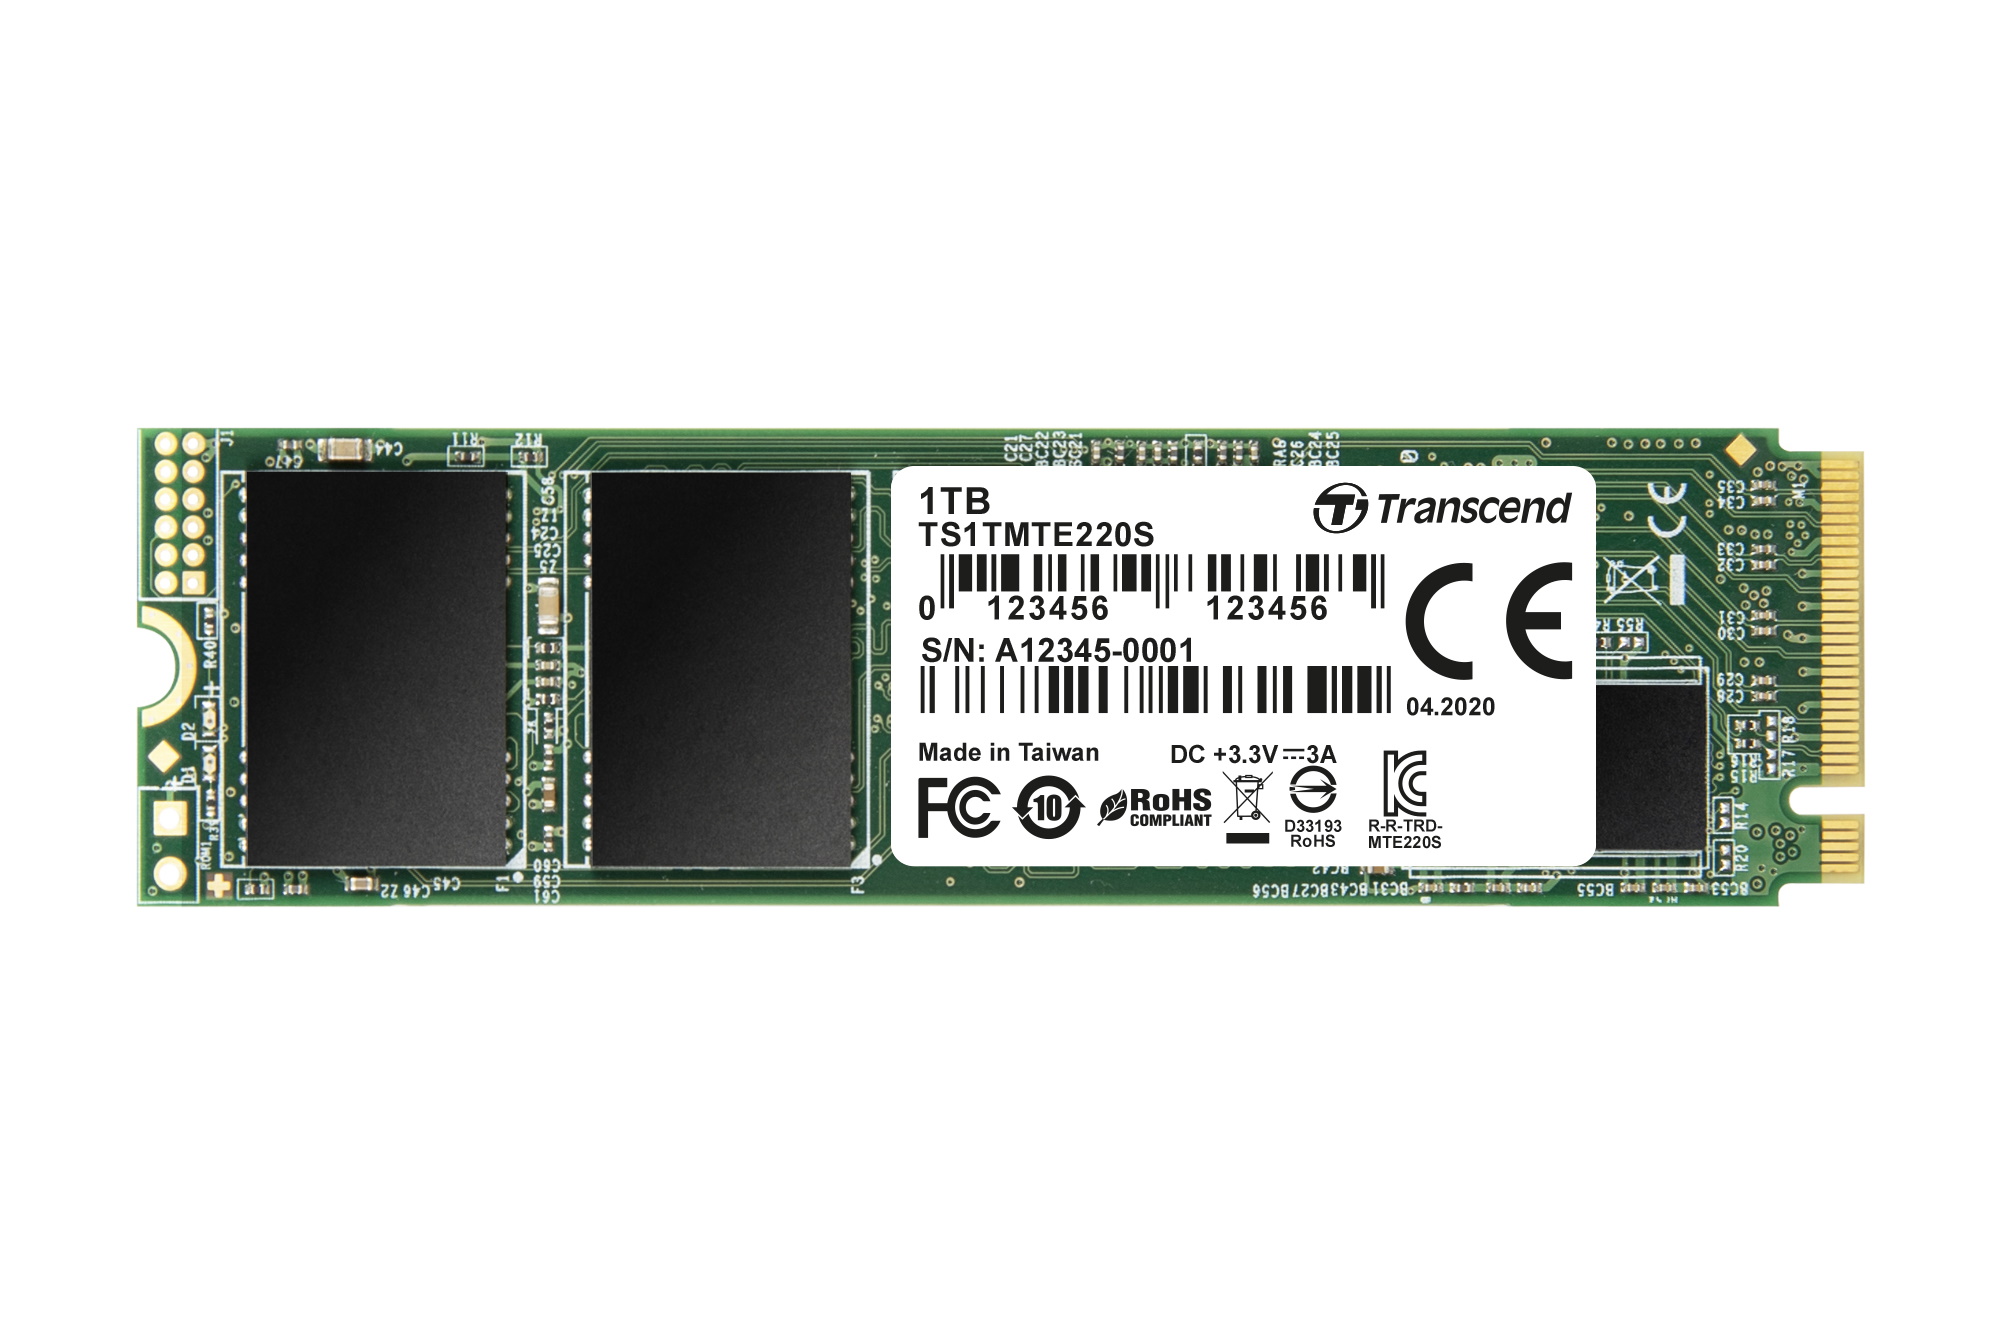 M.2 SSD 2280 256GB,PCIe Gen3 x 4, M Key,3D TLC, Kingston